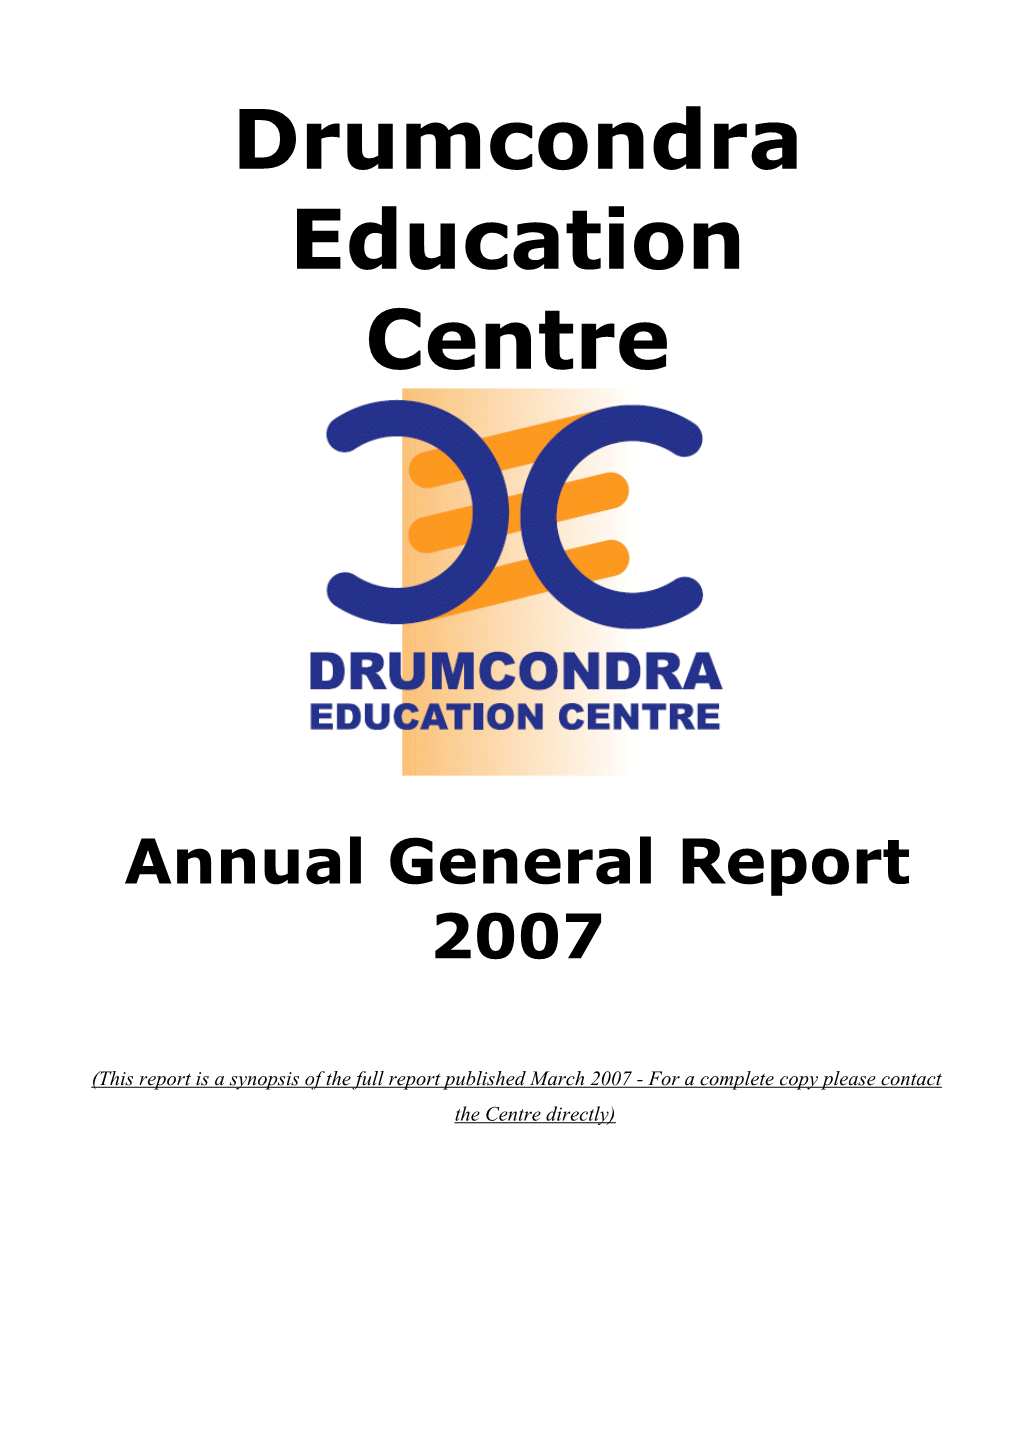 Drumcondra Education Centre